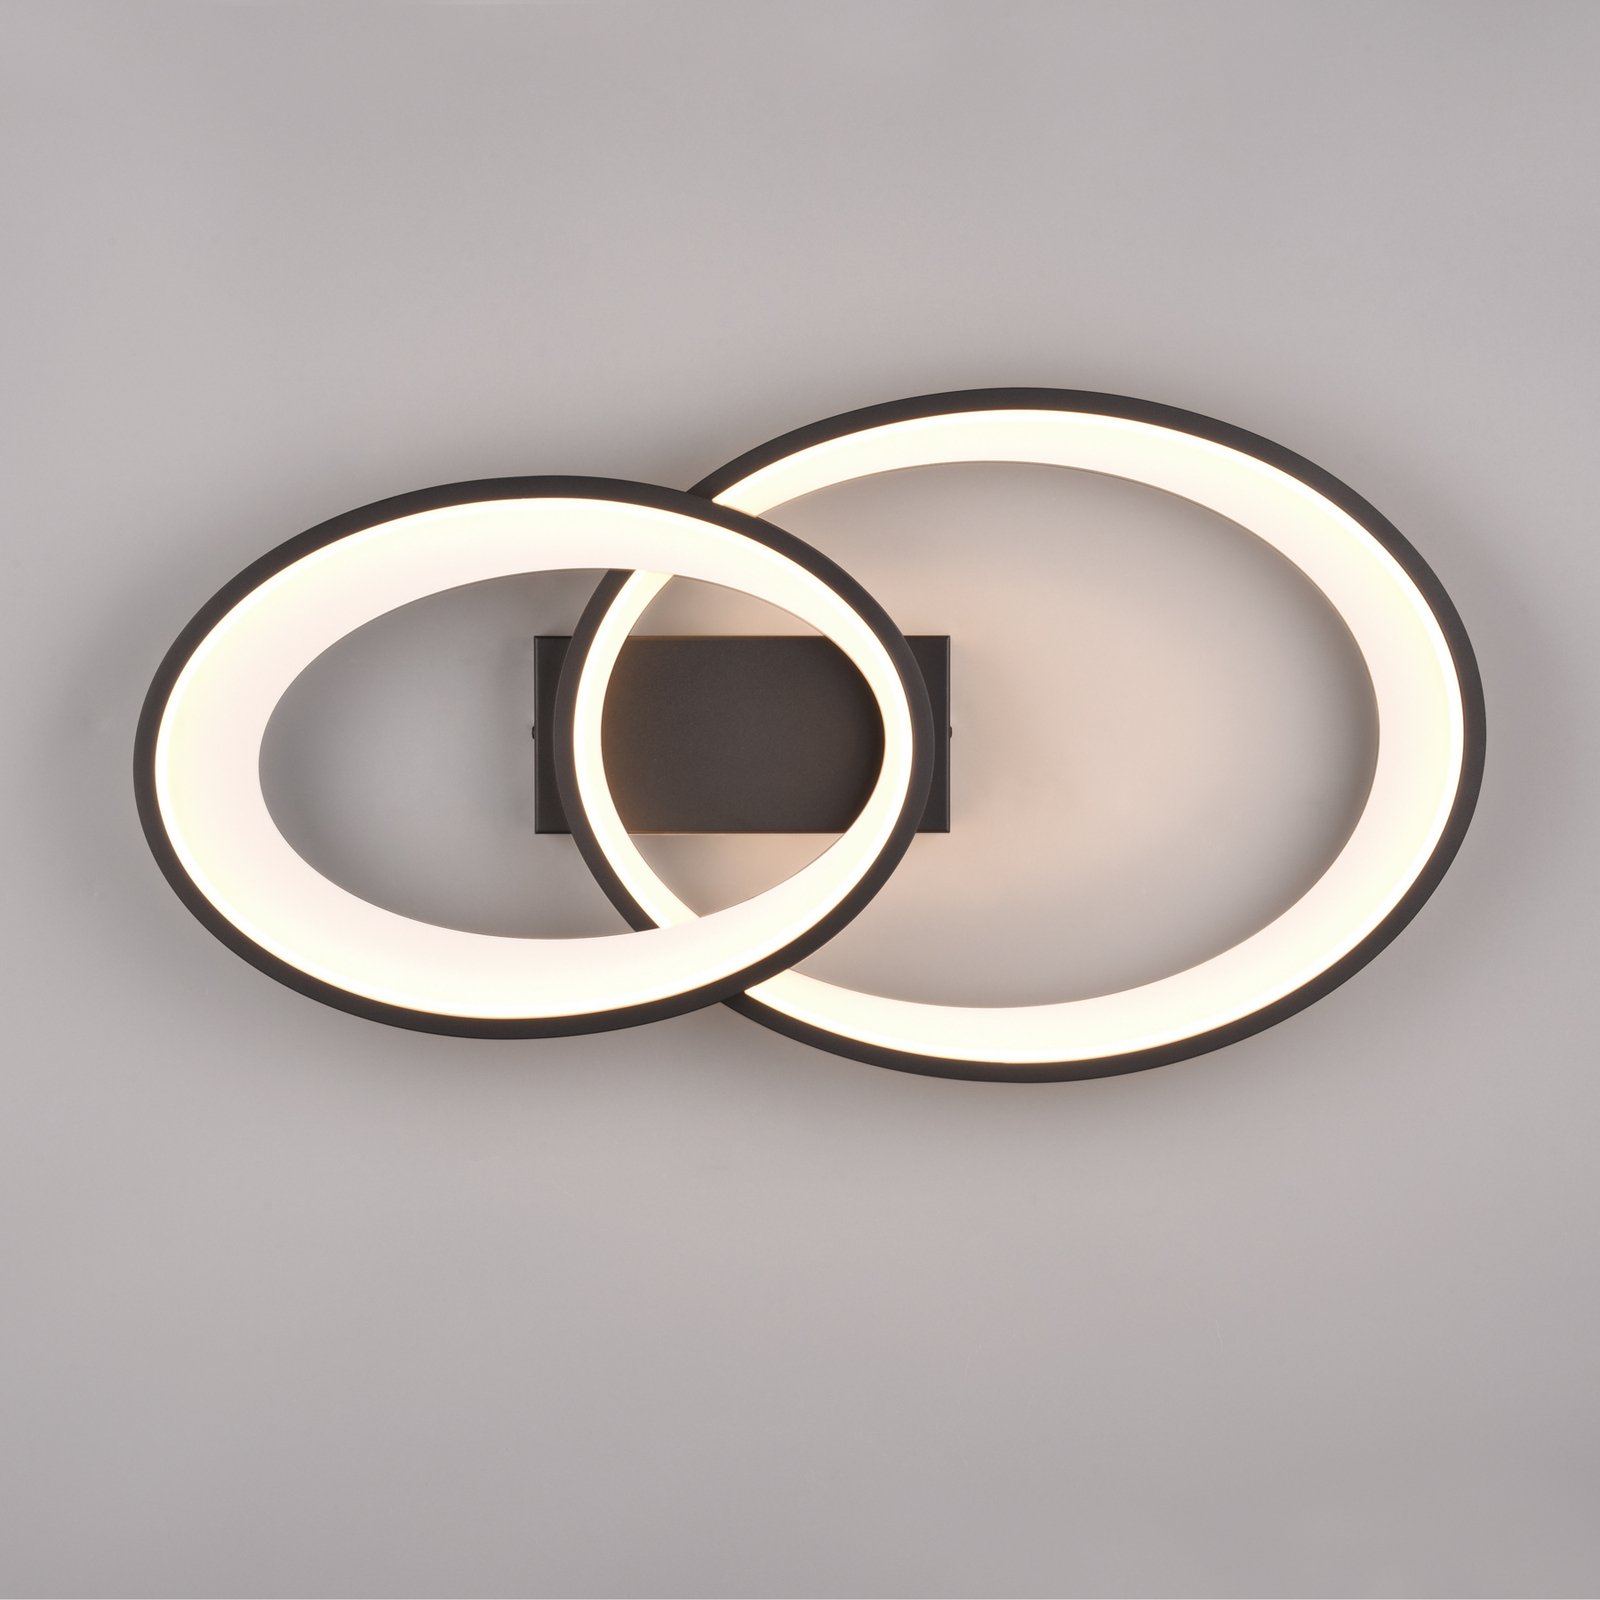 LED plafondlamp Malaga met 2 ringen, zwart